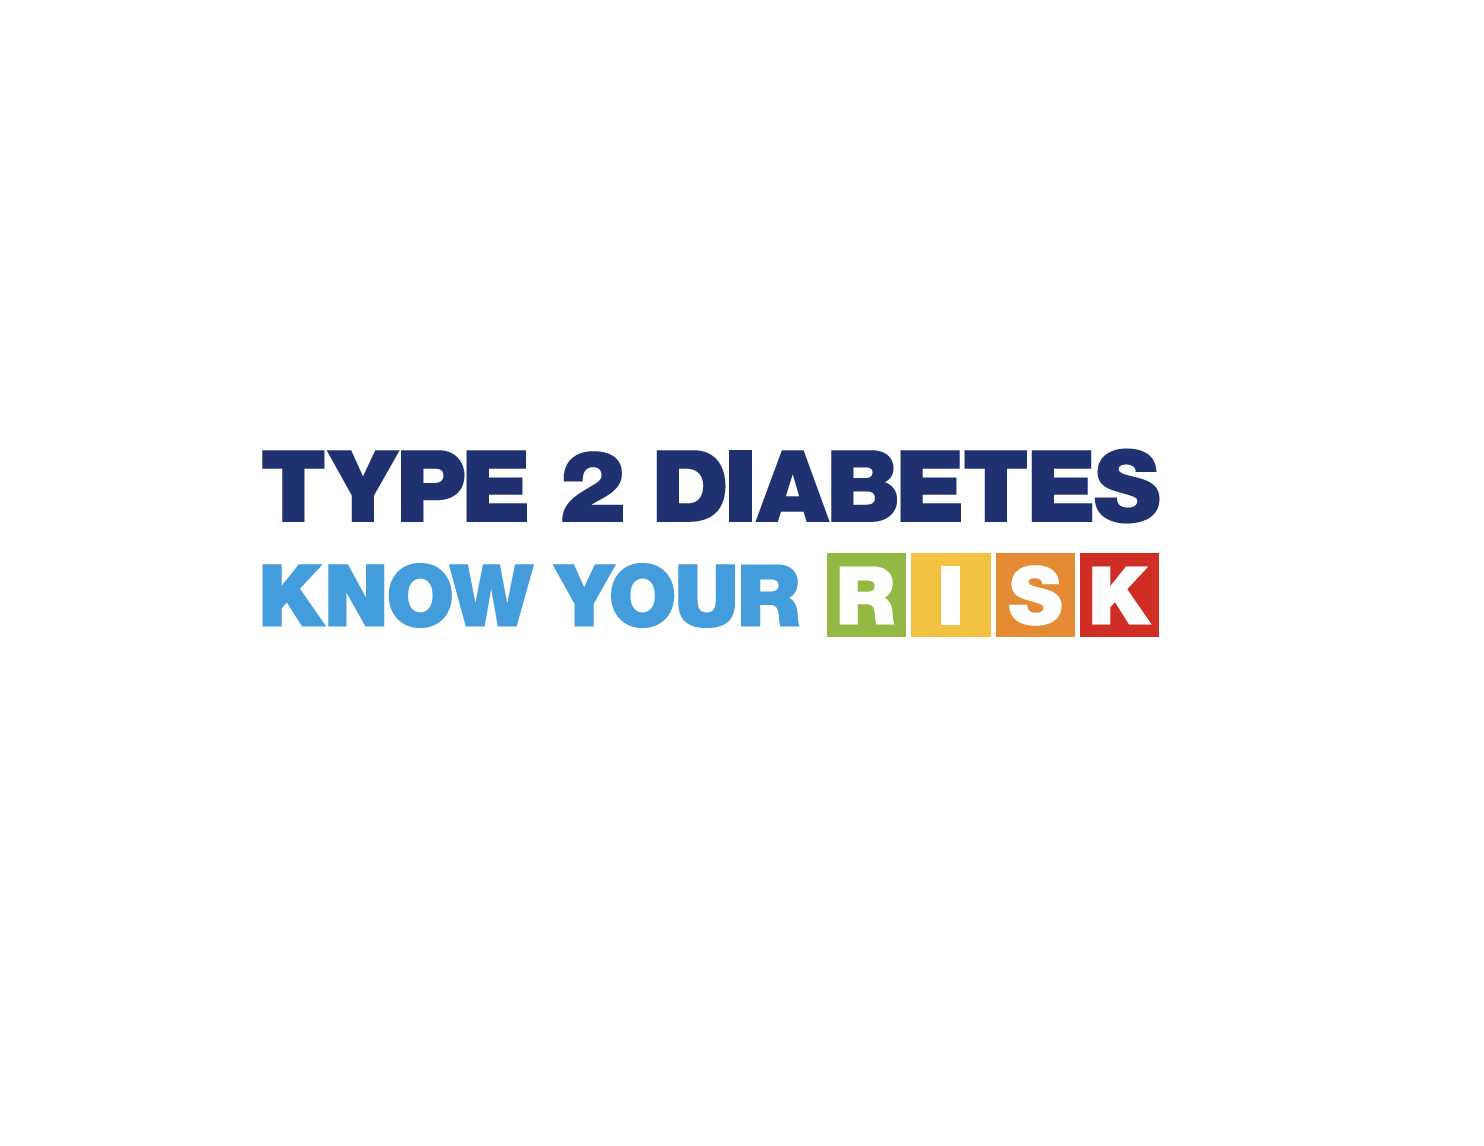 Diabetes UK – Know Your Risk of Type 2 diabetes